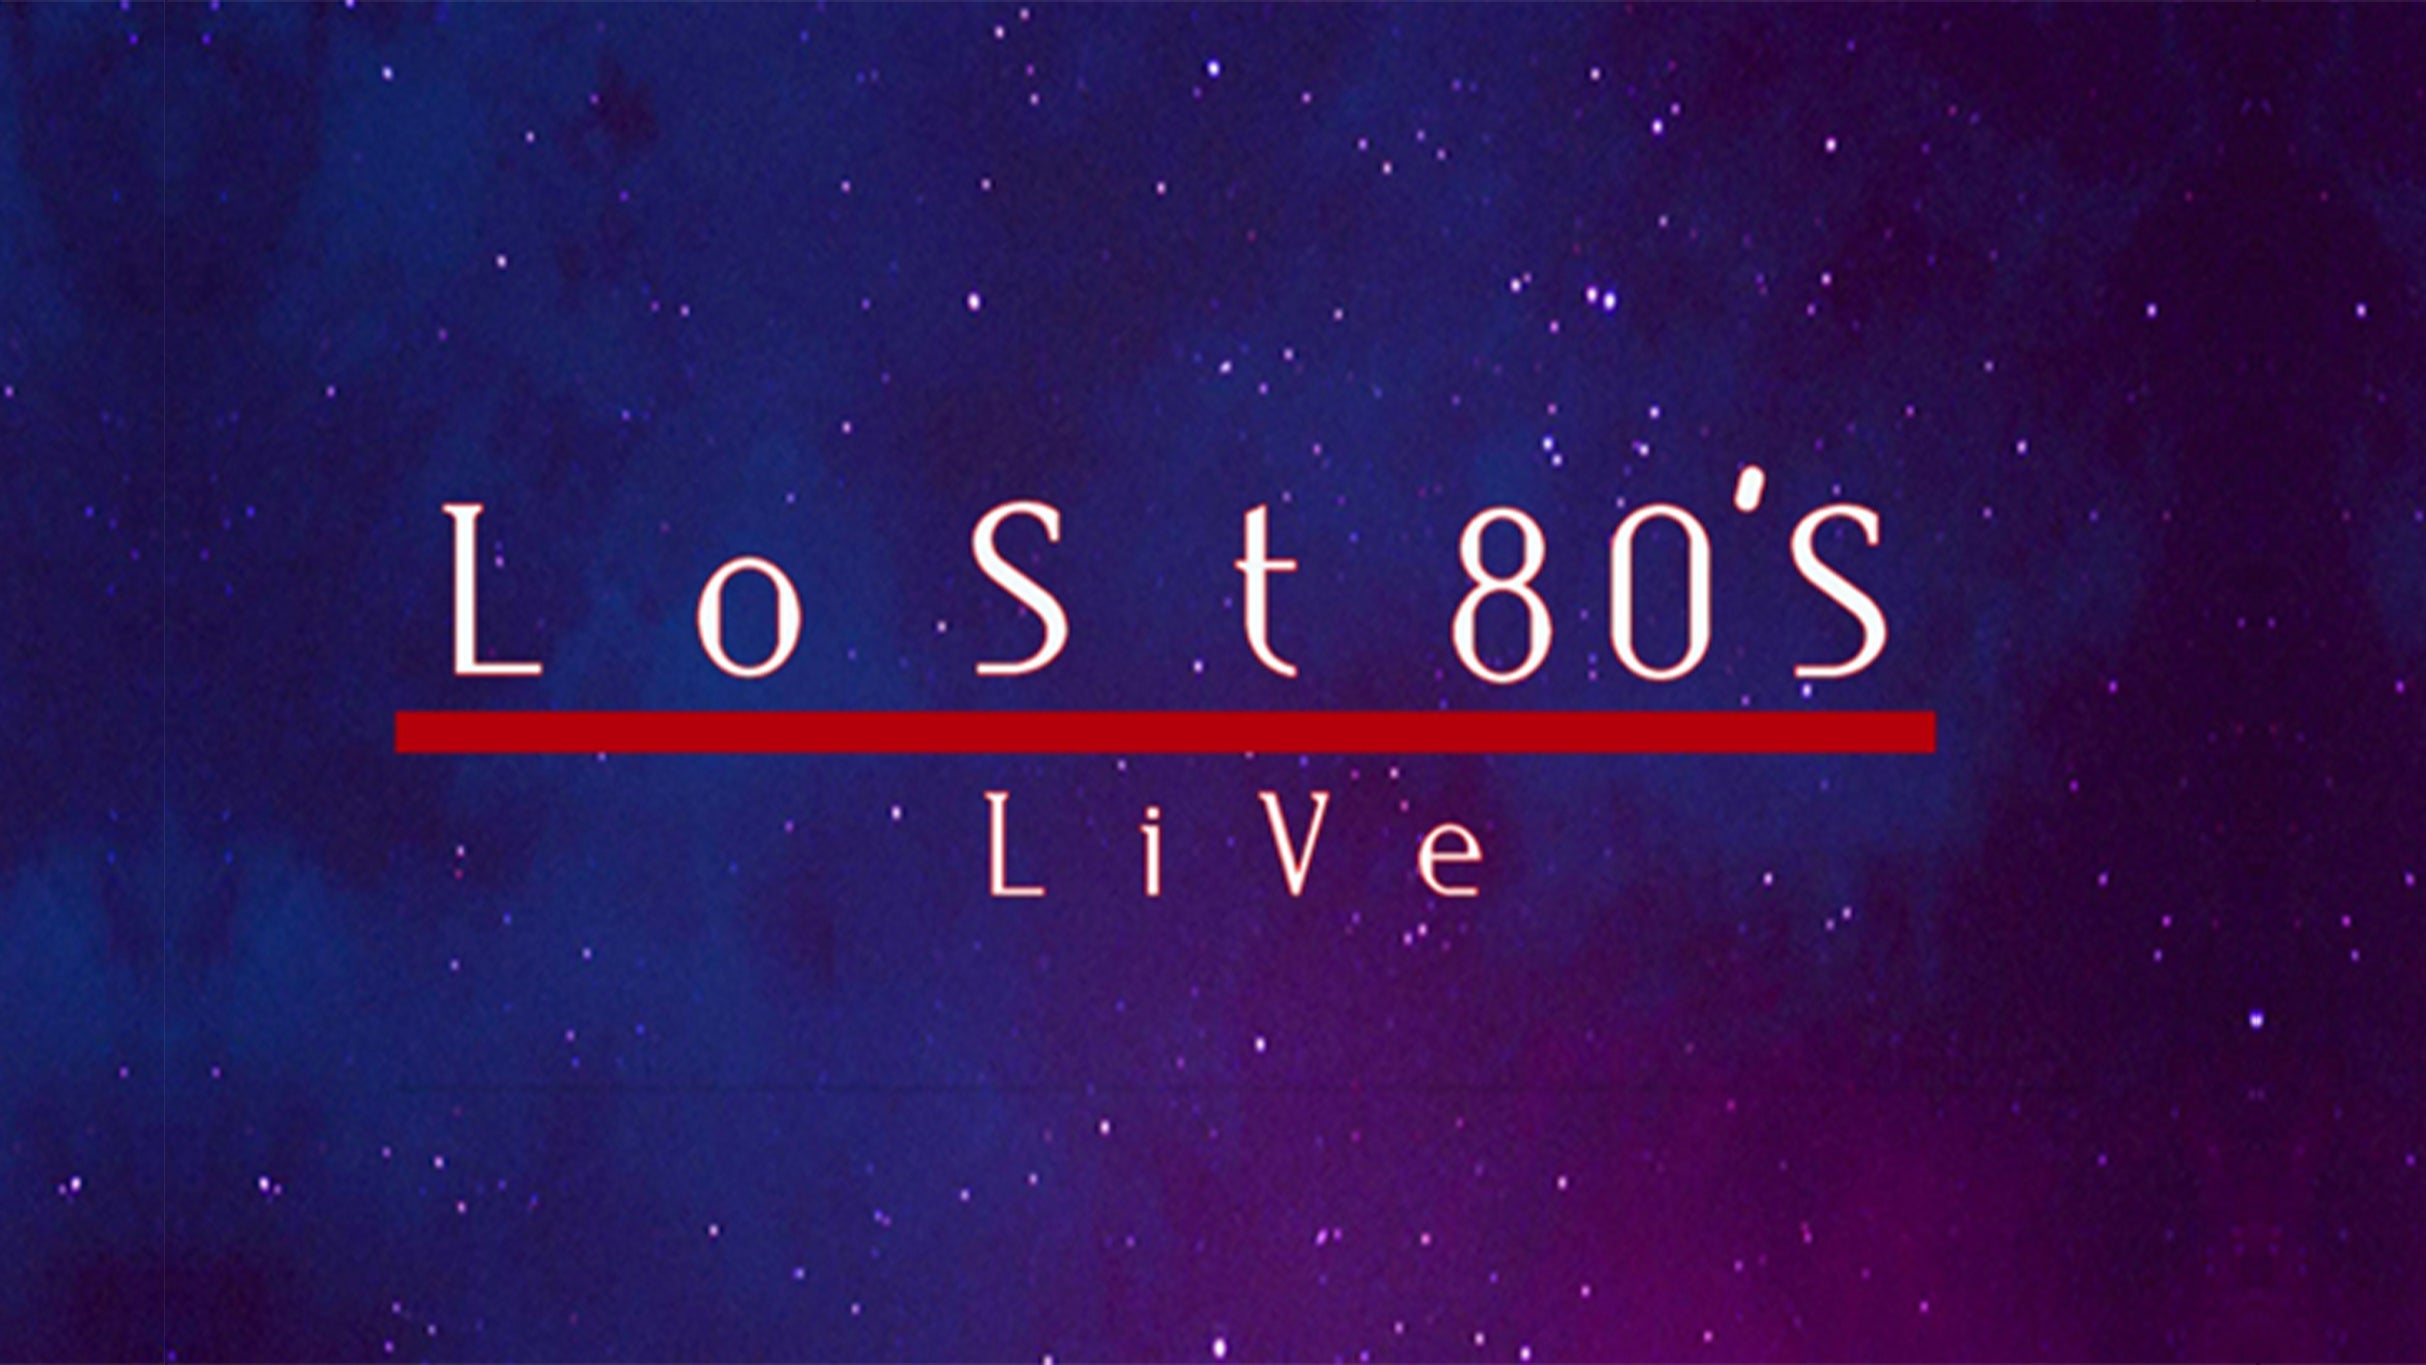 Lost 80's Live at Honda Center